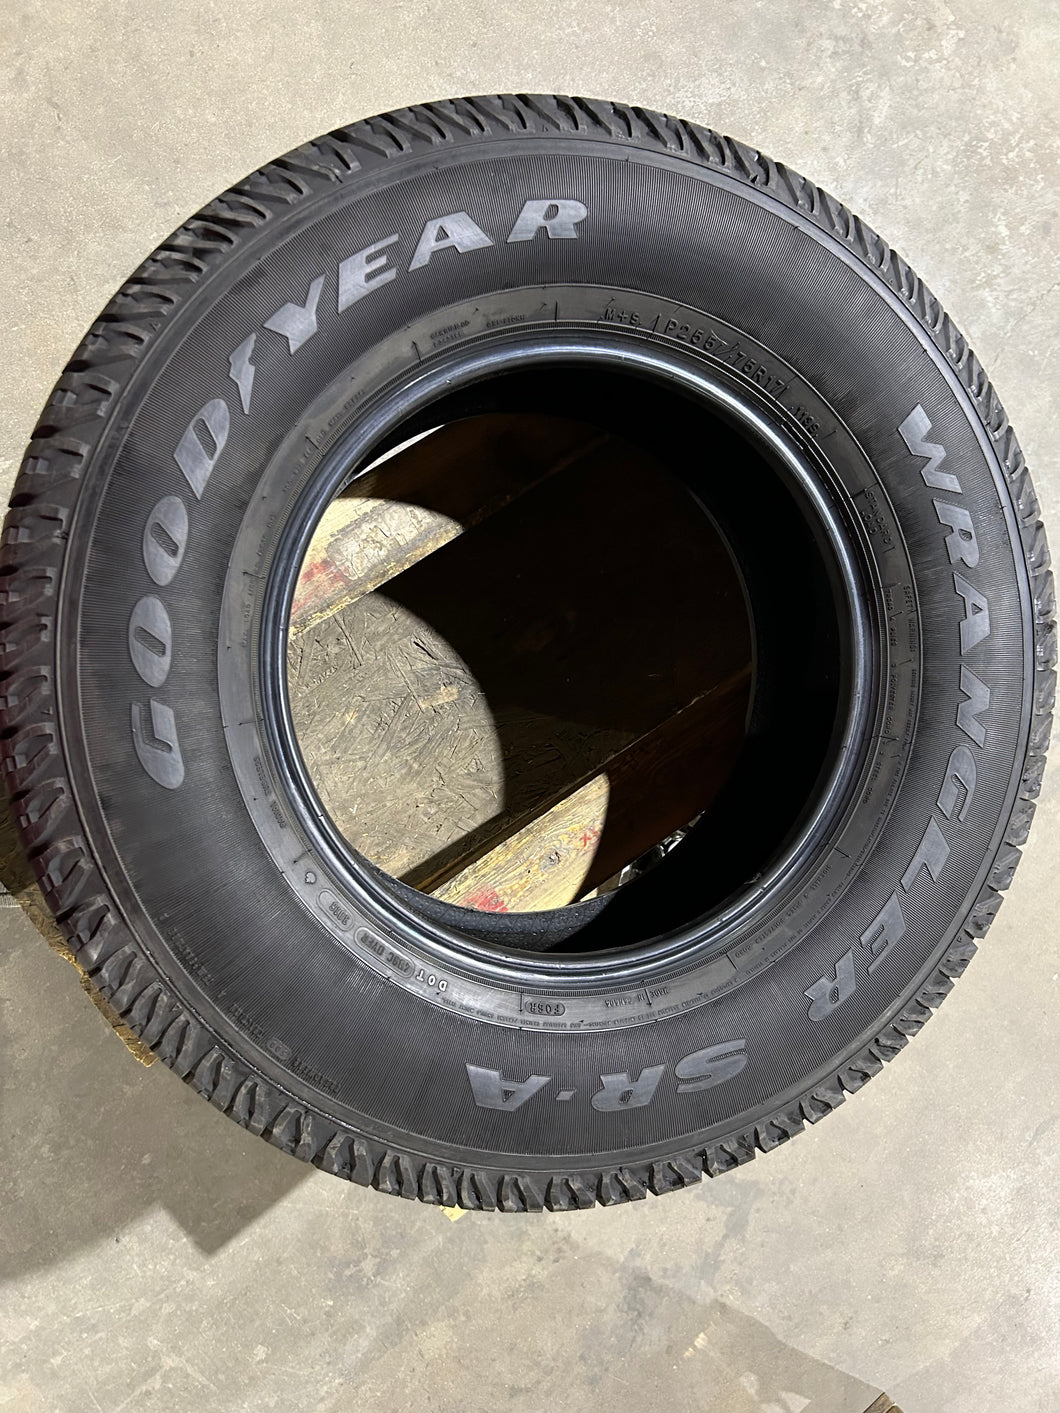 2557517 255/75R17 - 113S Goodyear Wrangler SR-A tire set 12/32